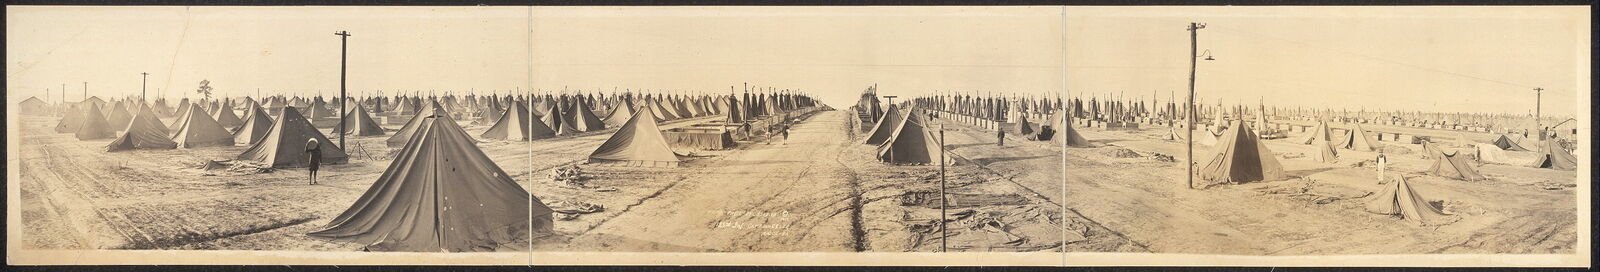 Photo:1917 Panoramic: 123rd Infantry,Camp Wheeler,Macon,Georgia